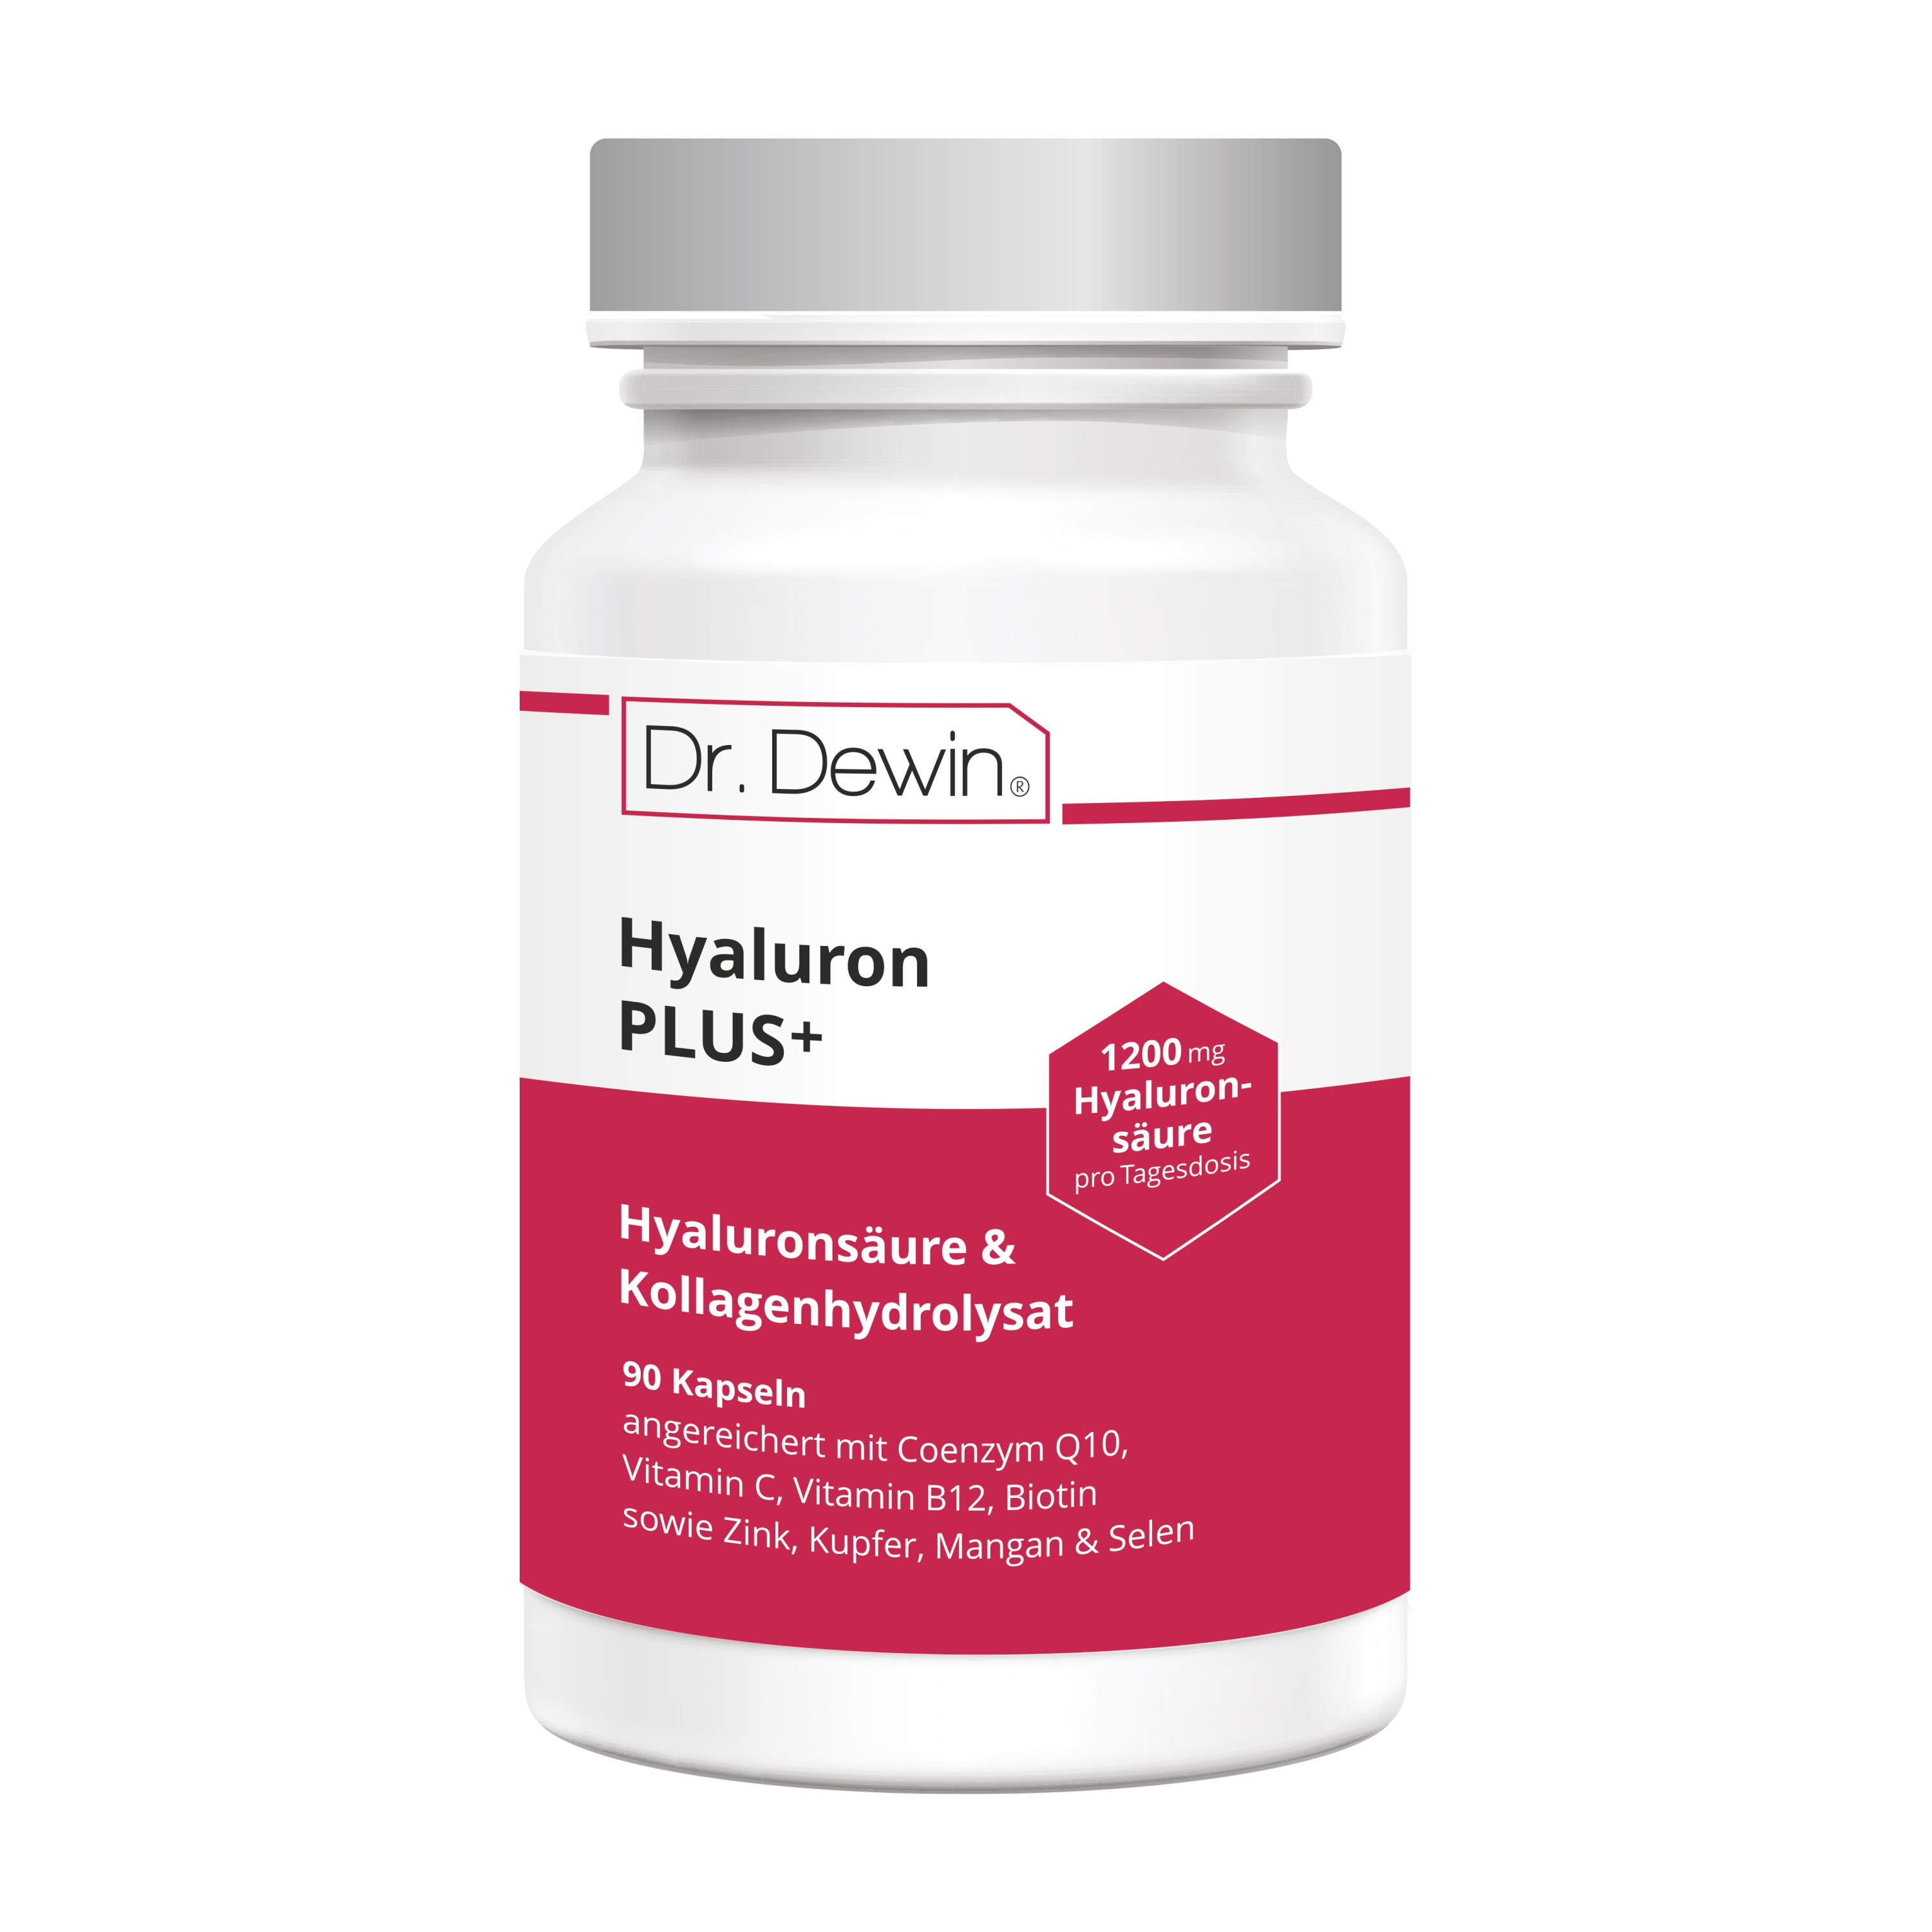 Dr. Dewin® Hyaluron PLUS